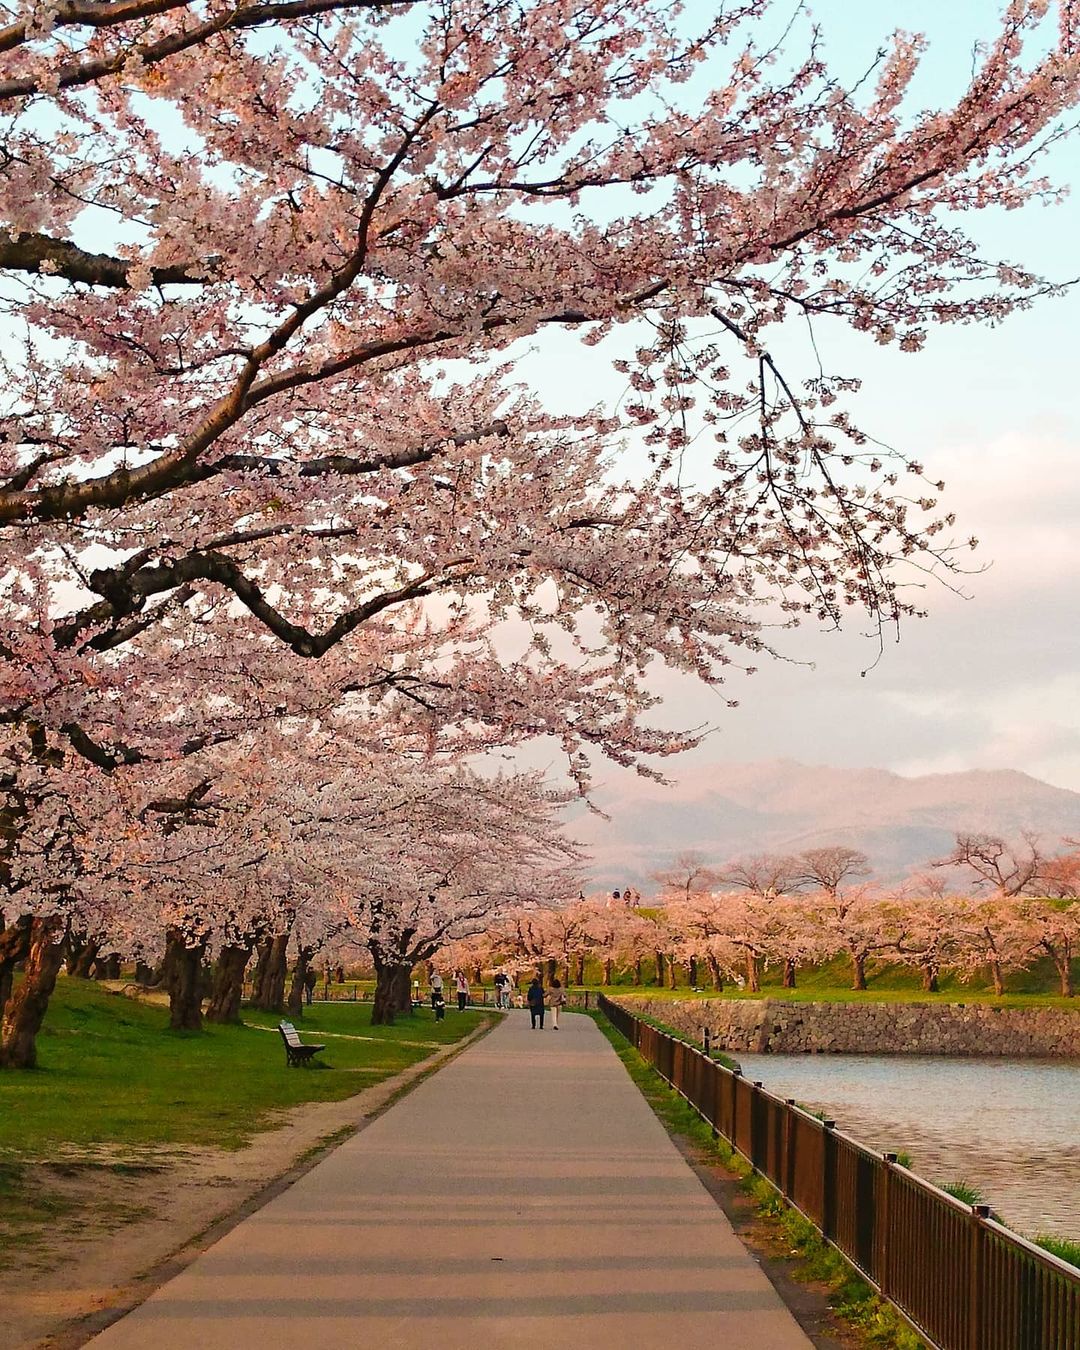 goryokaku park - cherry blossom trees